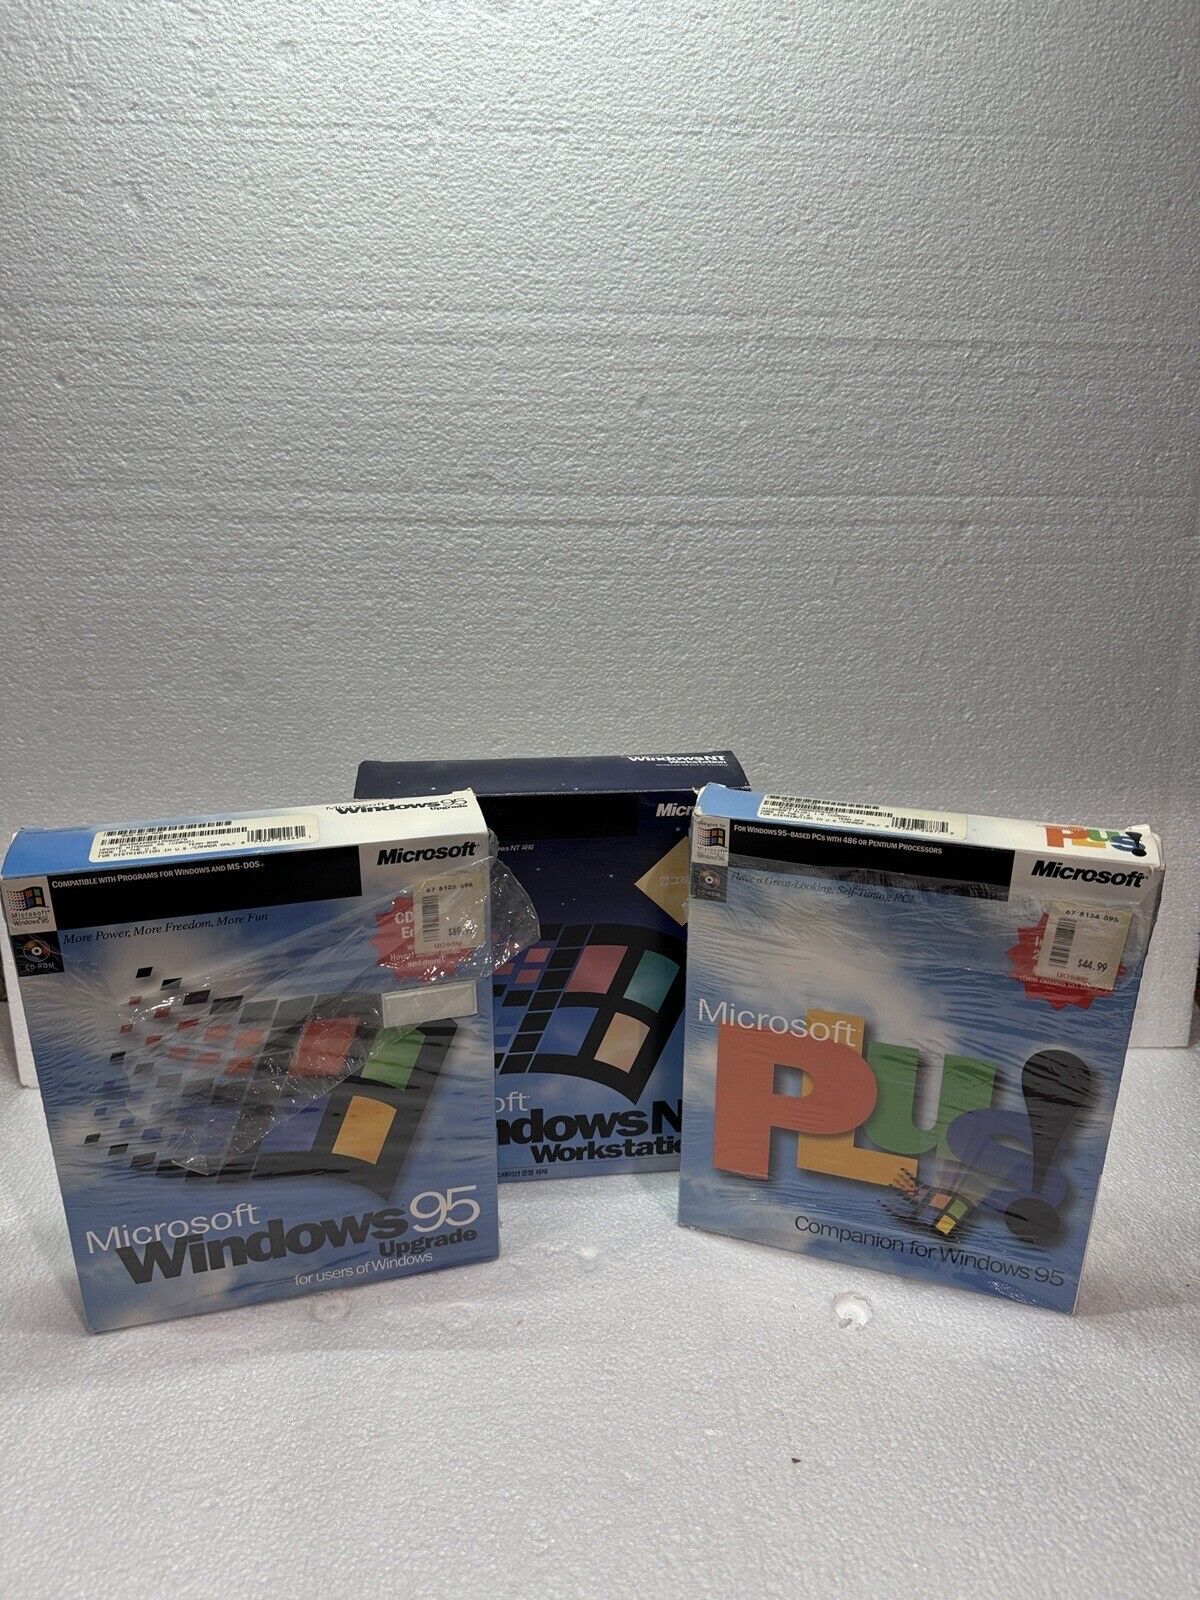 VINTAGE MICROSOFT WINDOWS 95, Plus, Korean Windows NT